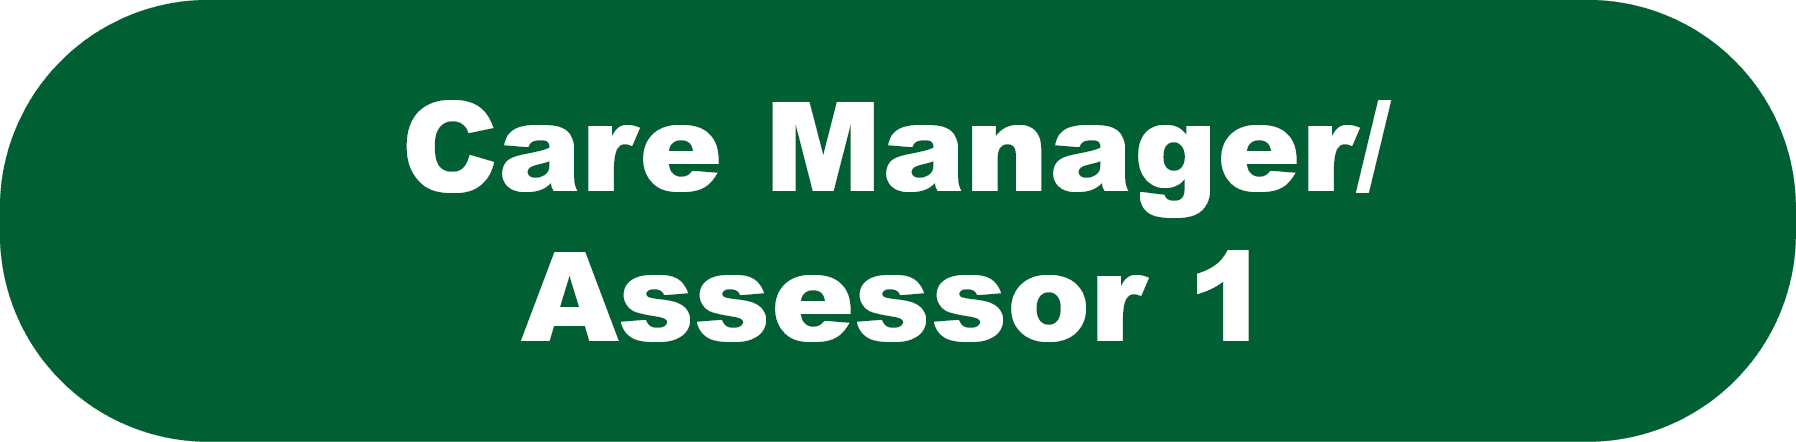 Care Manager/Assessor 1